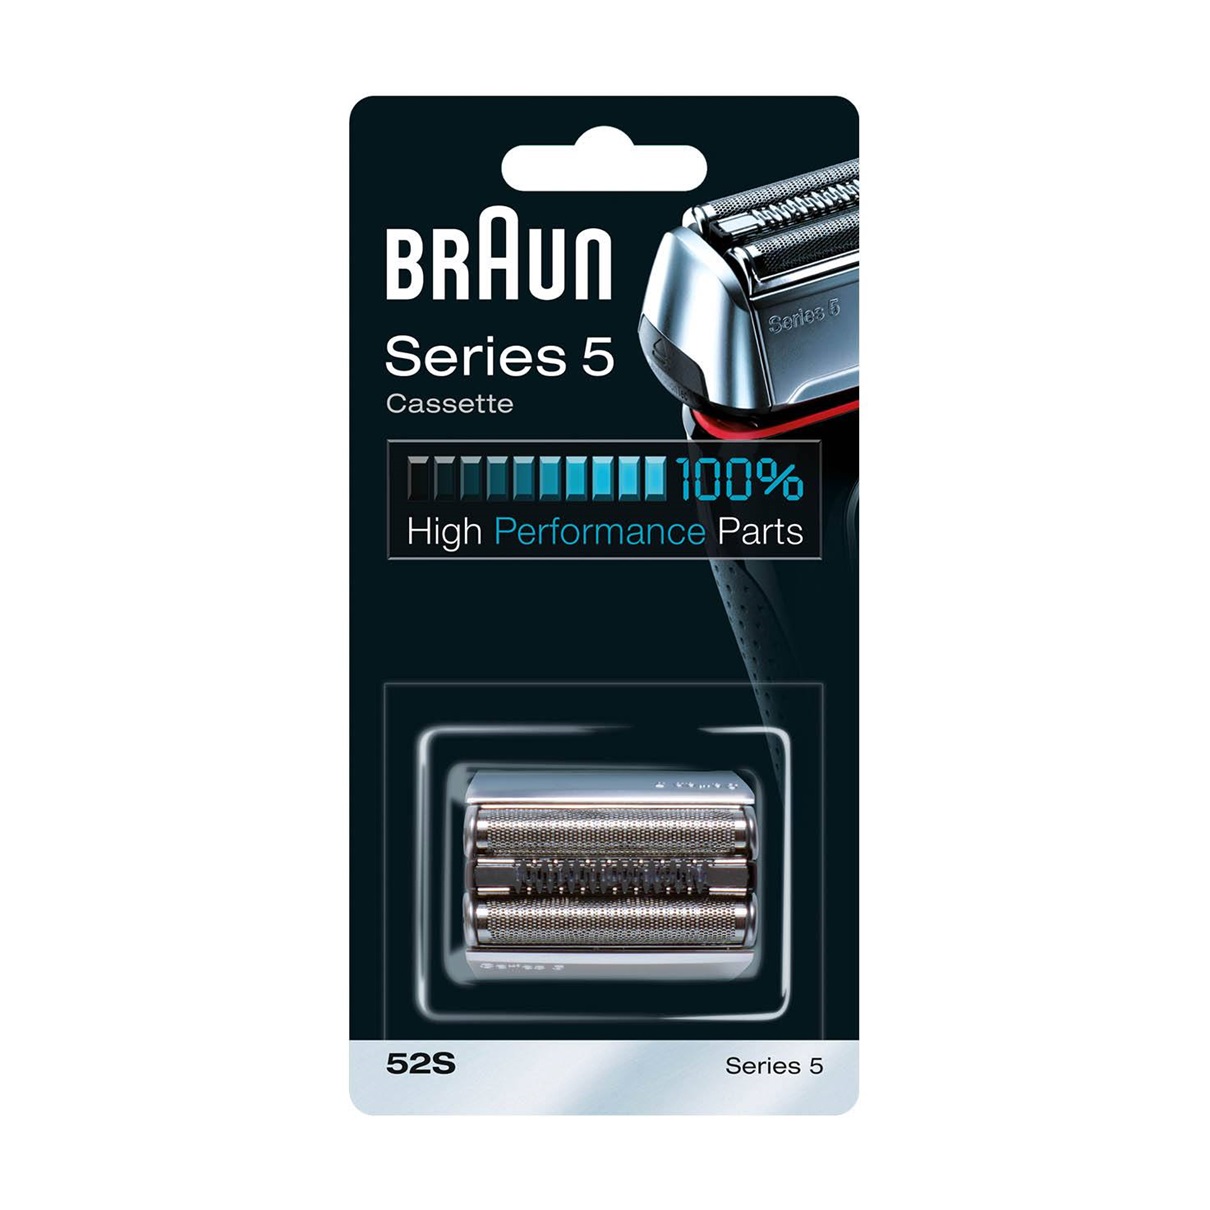 Сетка и режущий блок для бритв Braun 52S сетка и режущий блок cruser 20s 2000 series braun браун 65733762 81253250 81387934